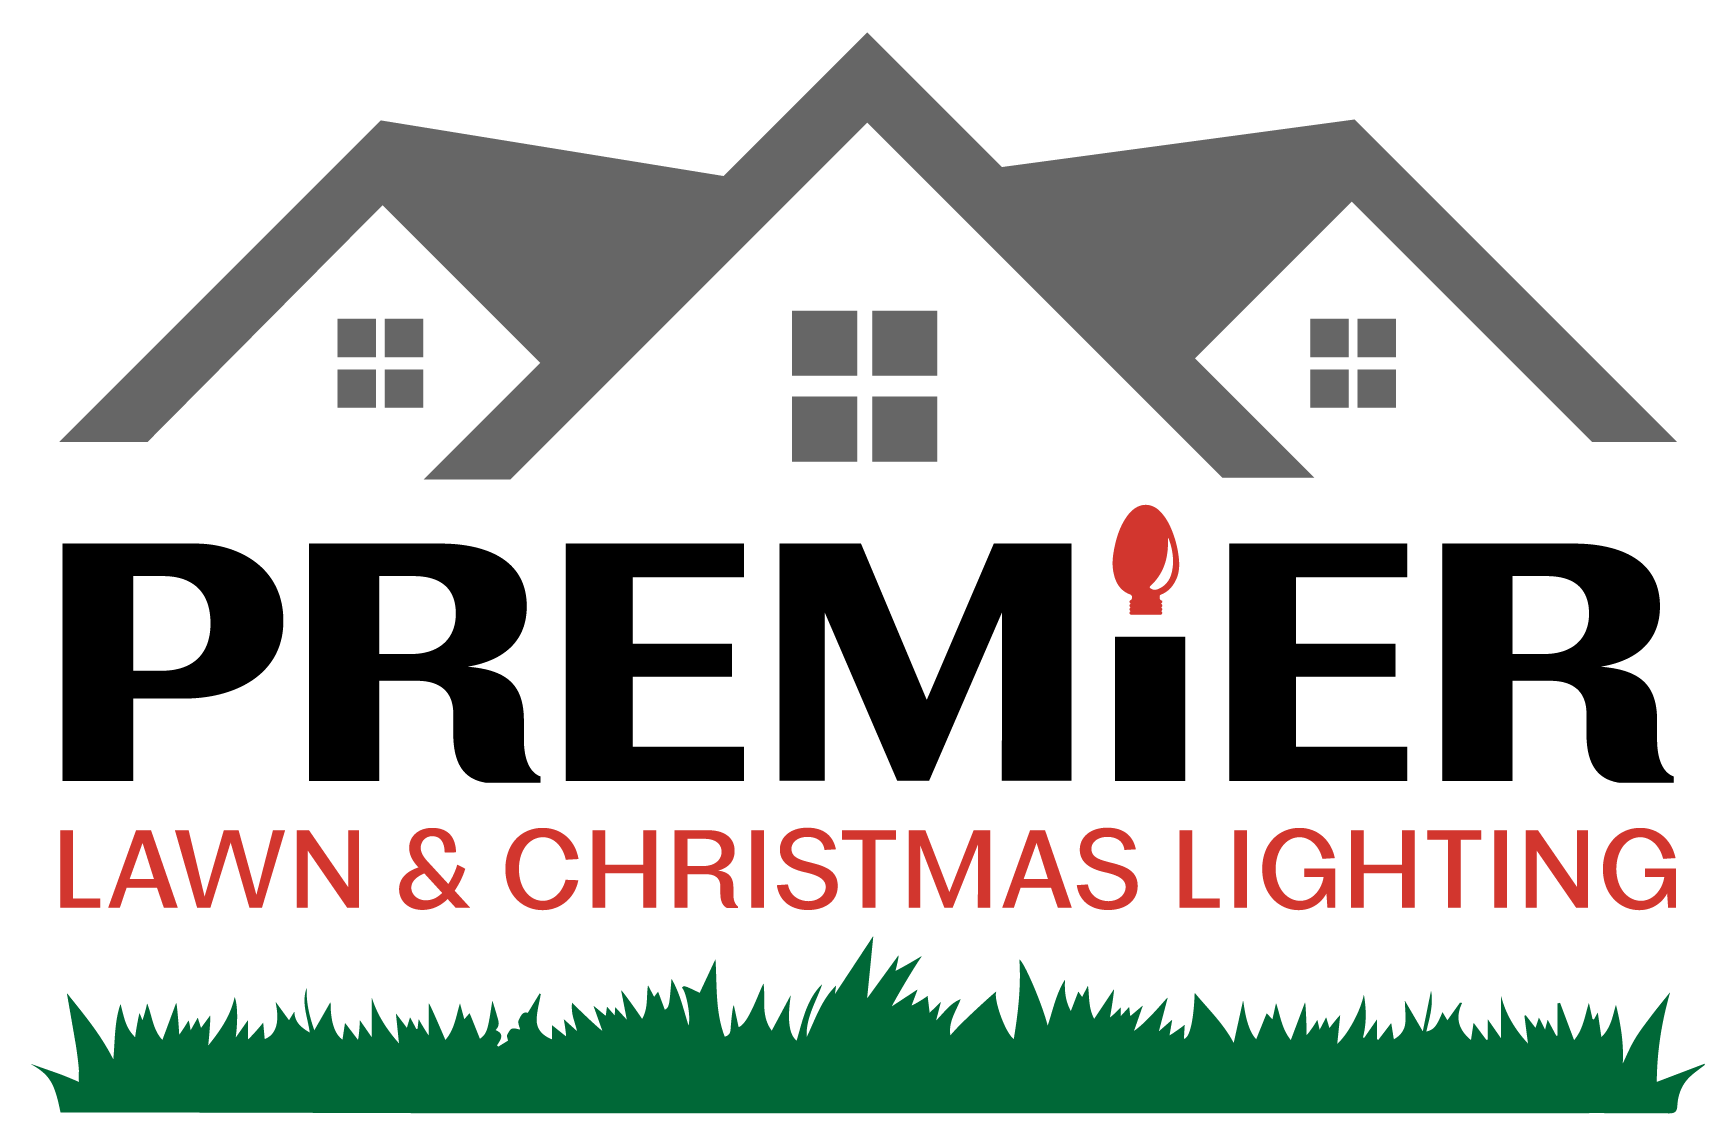 Premier Lawn & Christmas Lighting